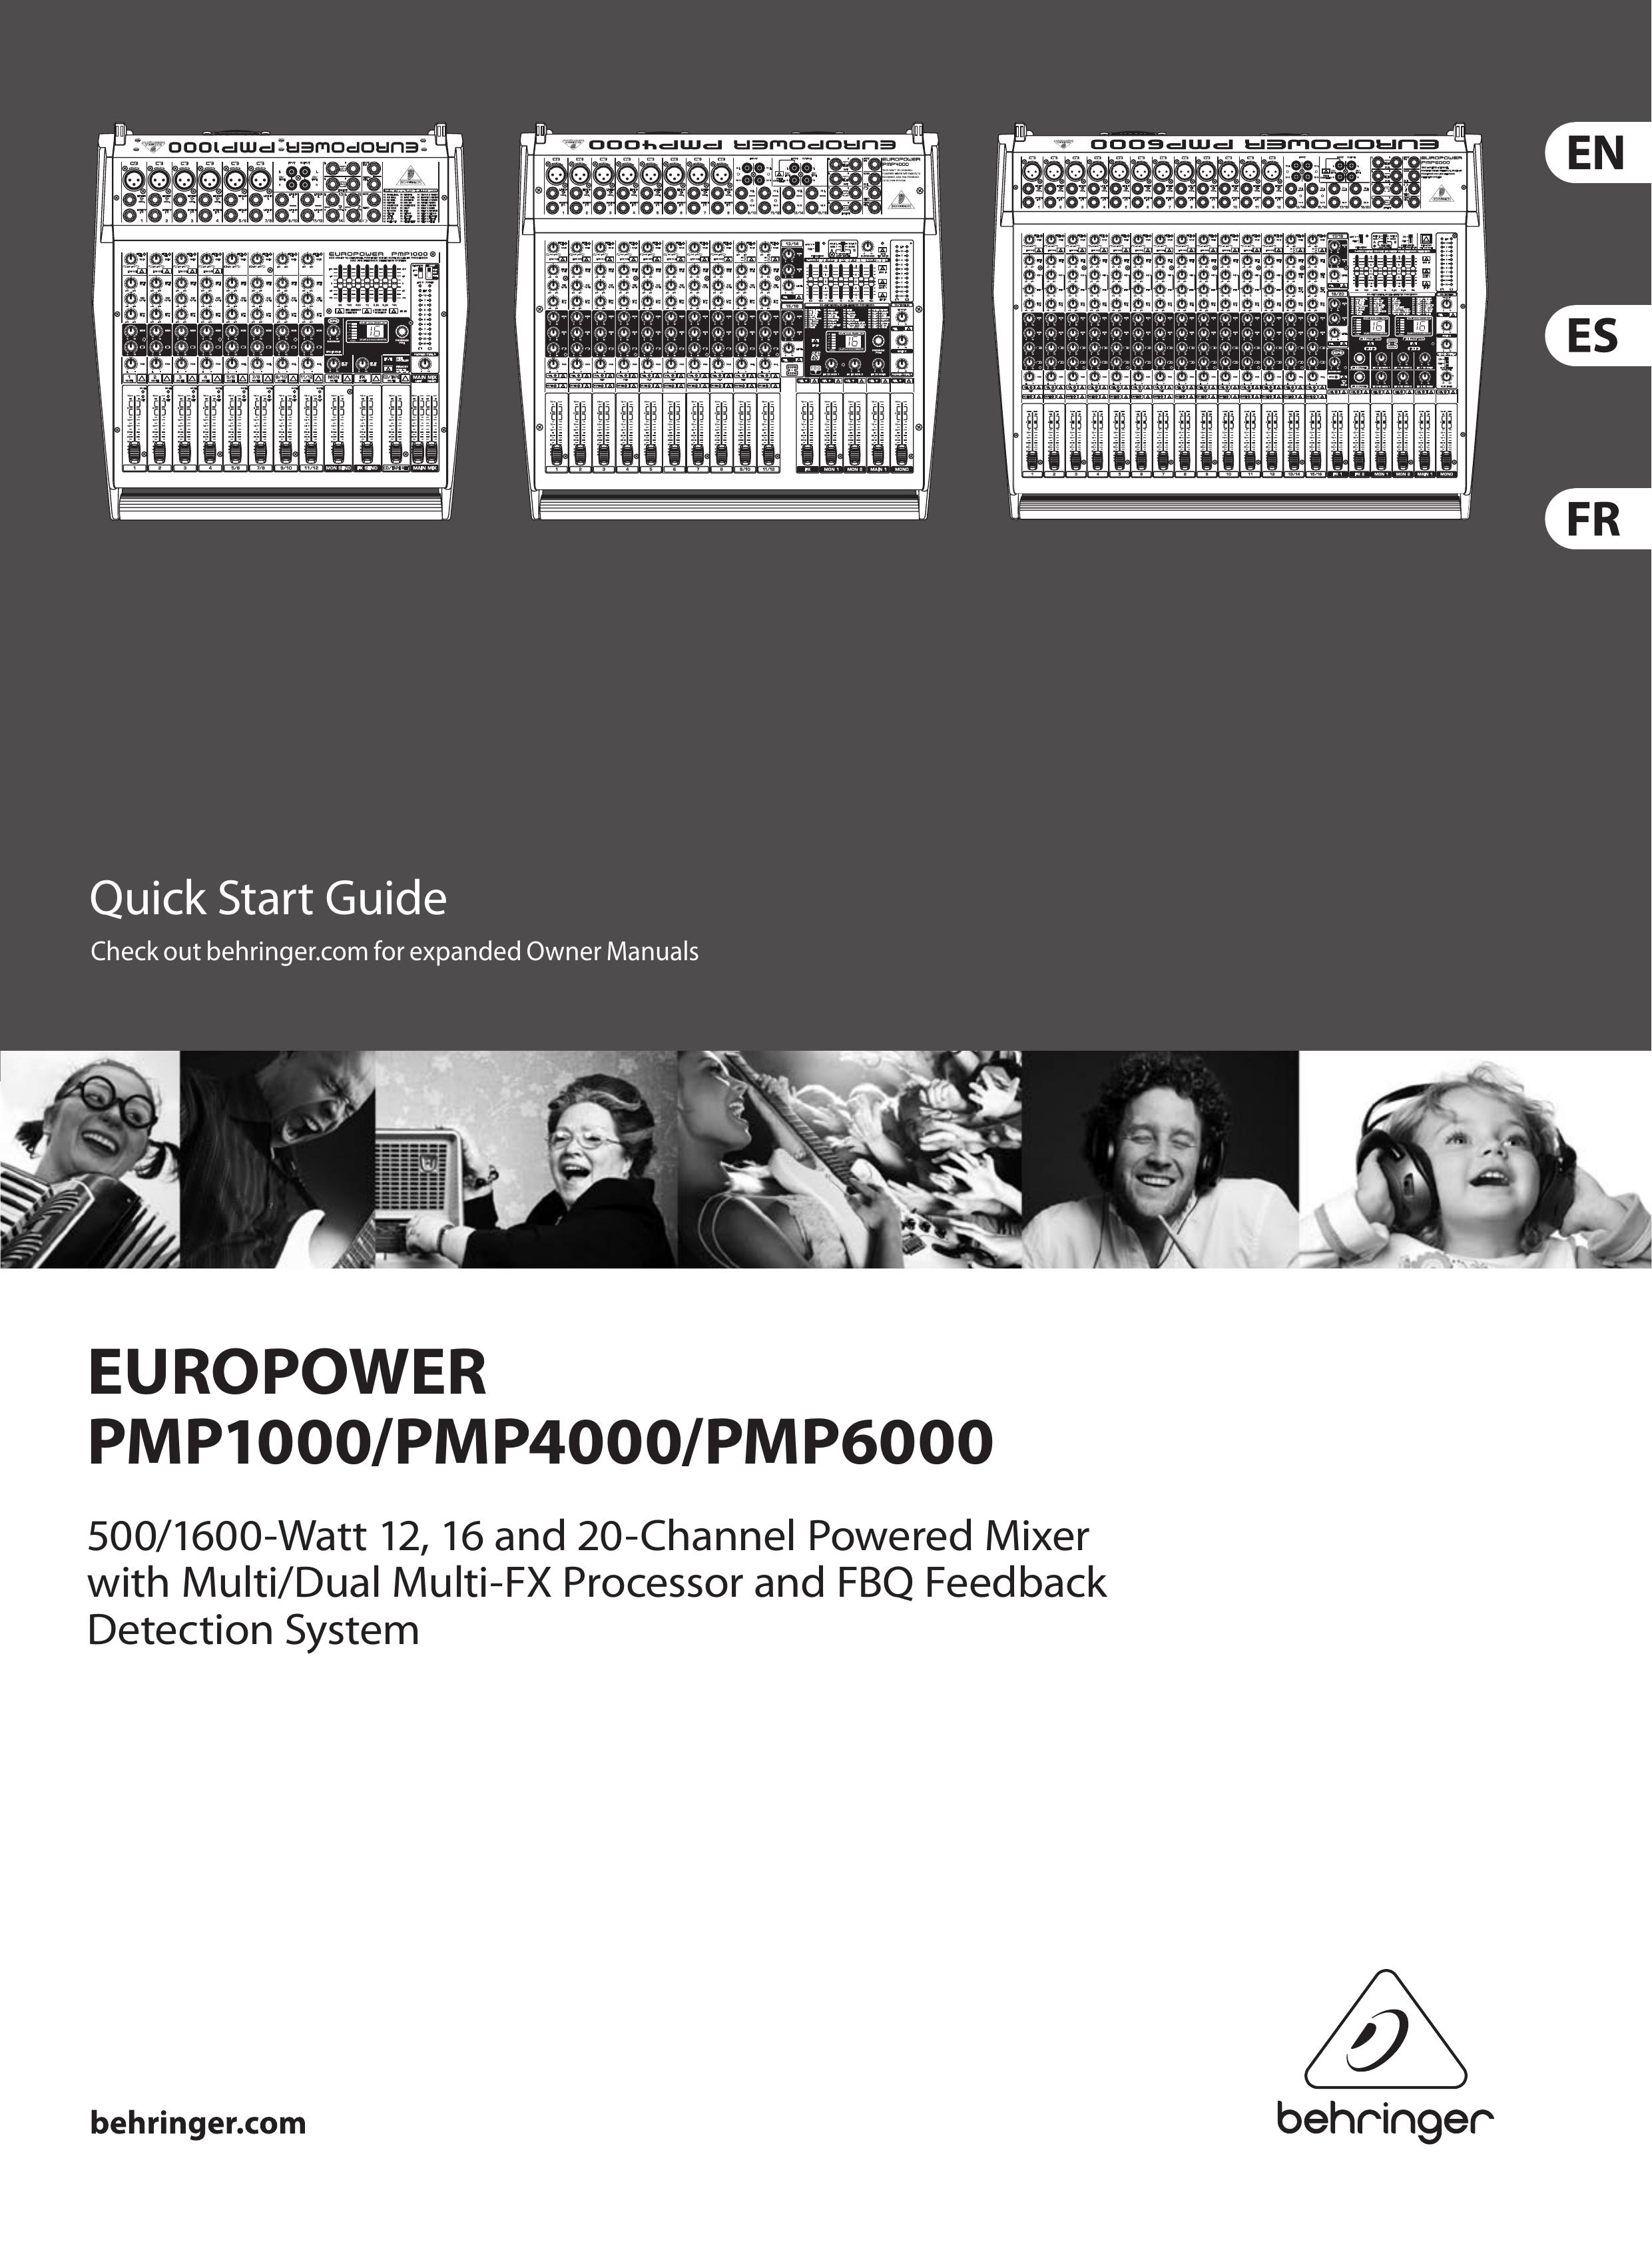 Behringer PMP1000 Music Mixer User Manual